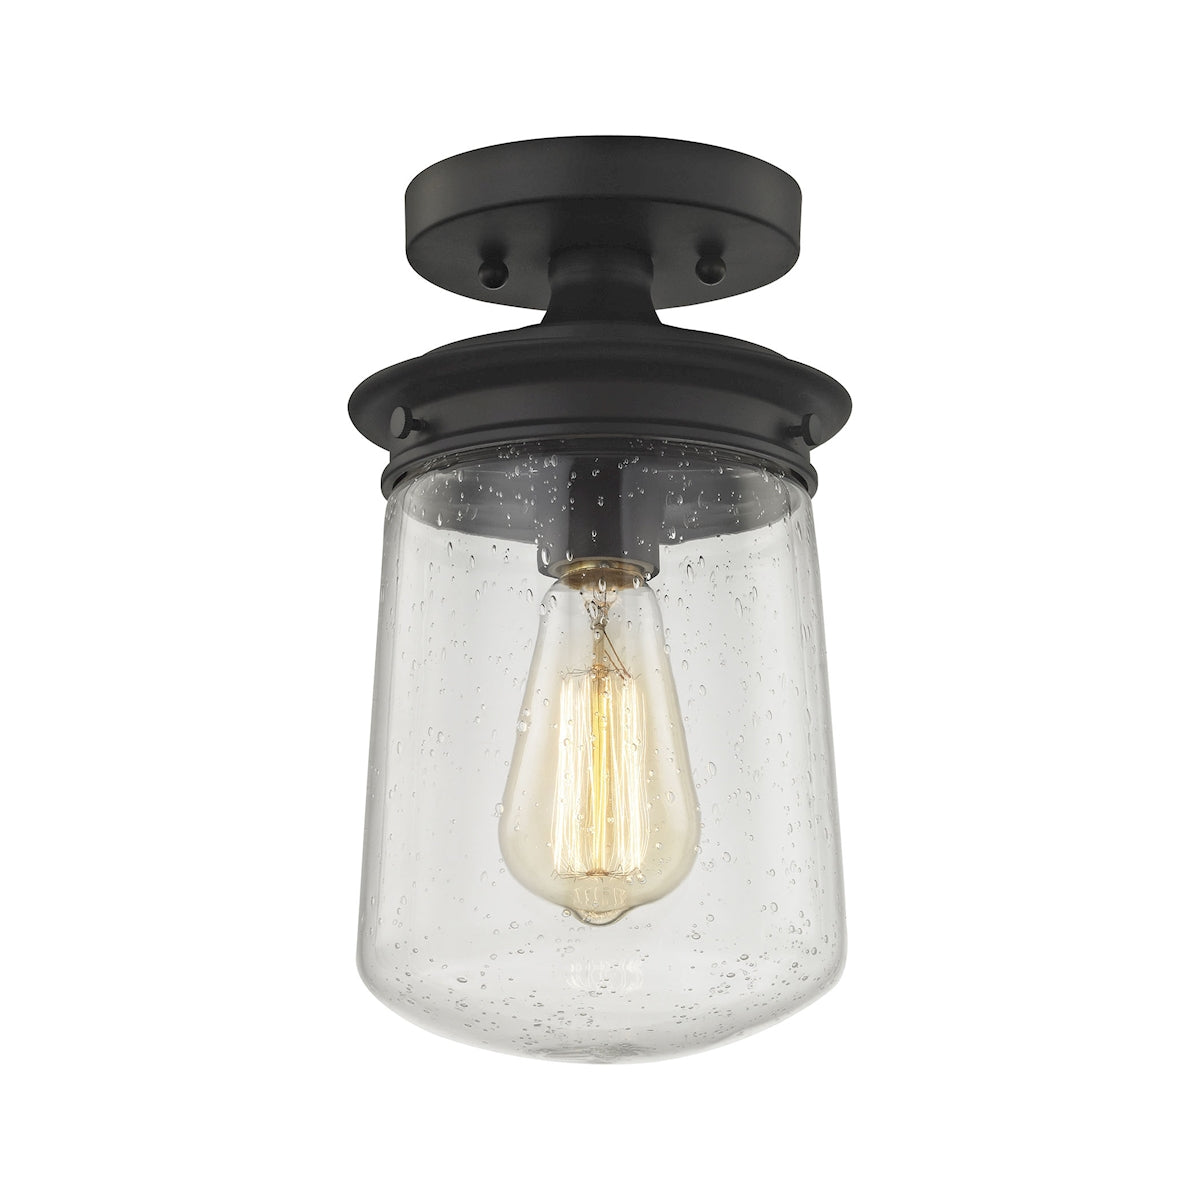 ELK Lighting 81224/1 Hamel 1-Light Semi Flush in Oil Rubbed Bronze with Clear Seedy Glass